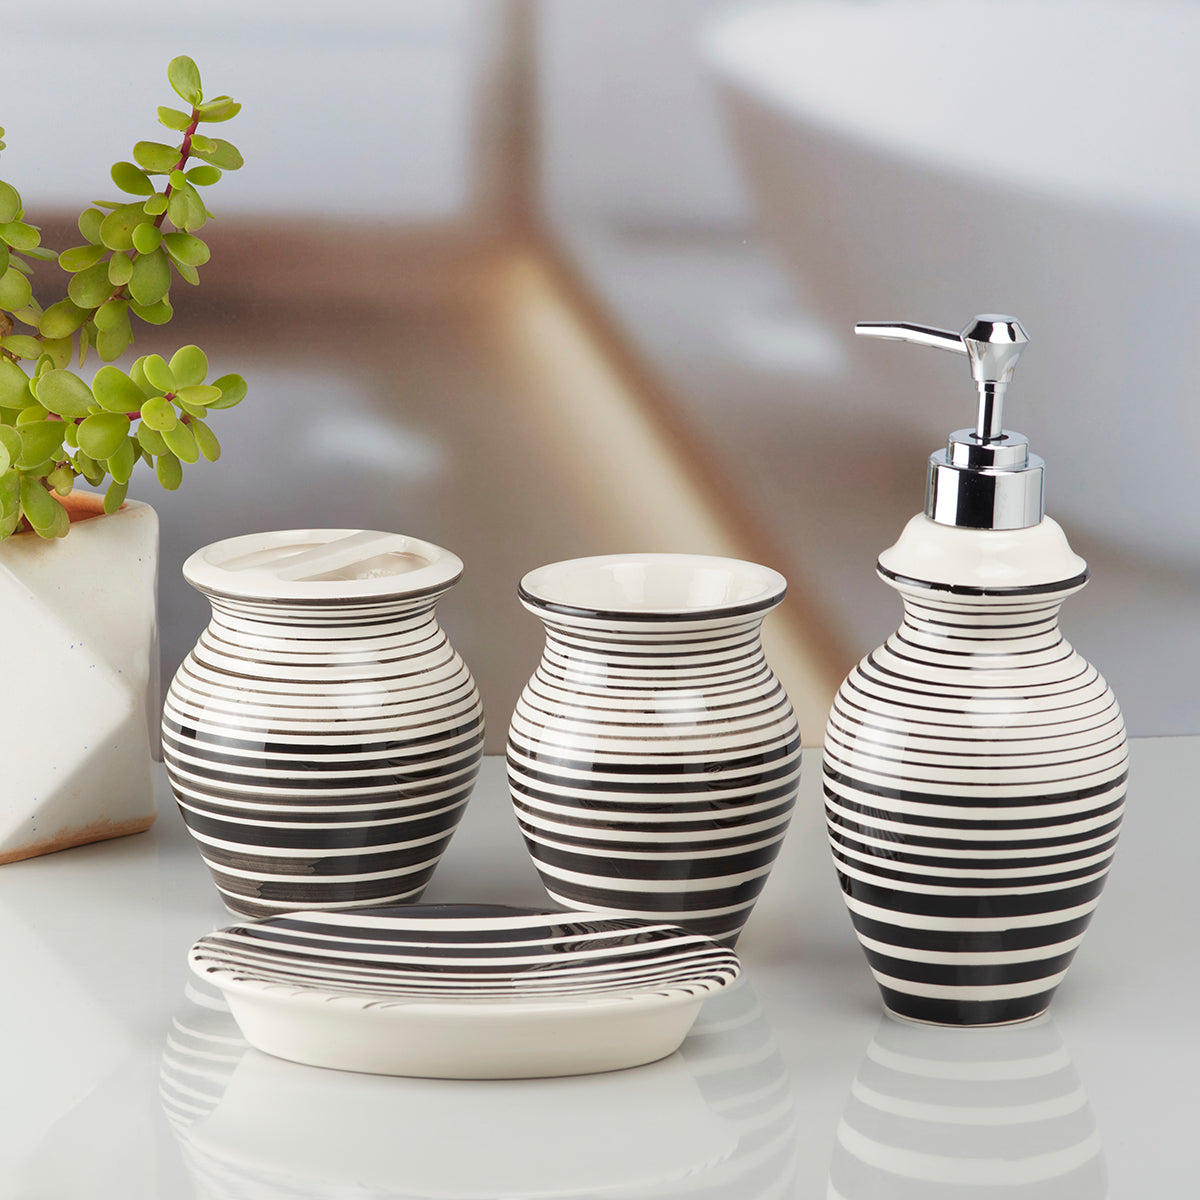 Ceramic Bathroom Set of 4 with Soap Dispenser (10187)